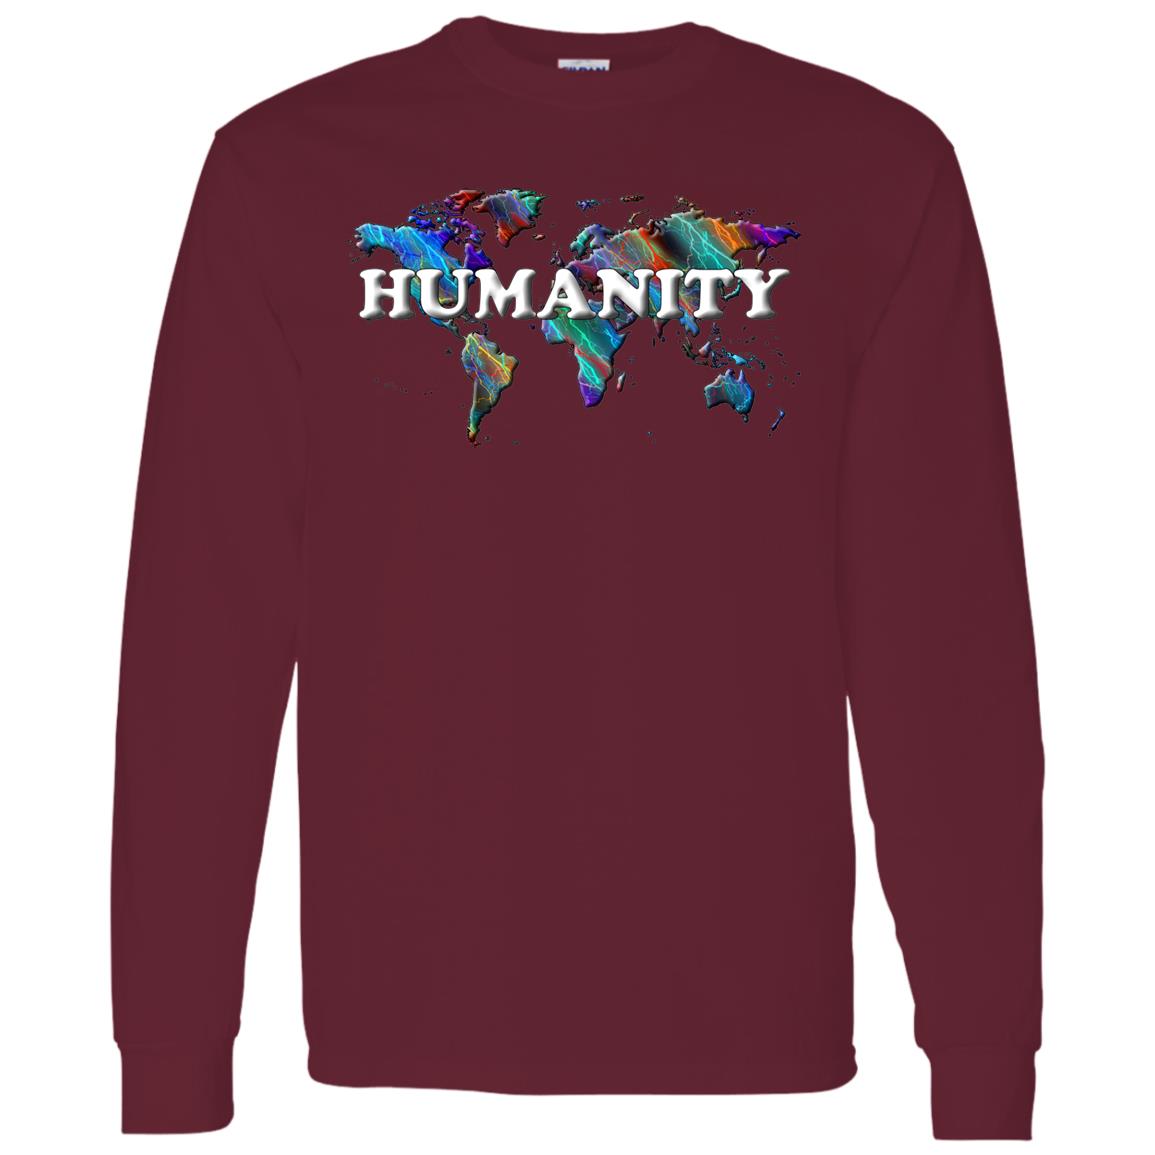 Humanity Long Sleeve T-Shirt